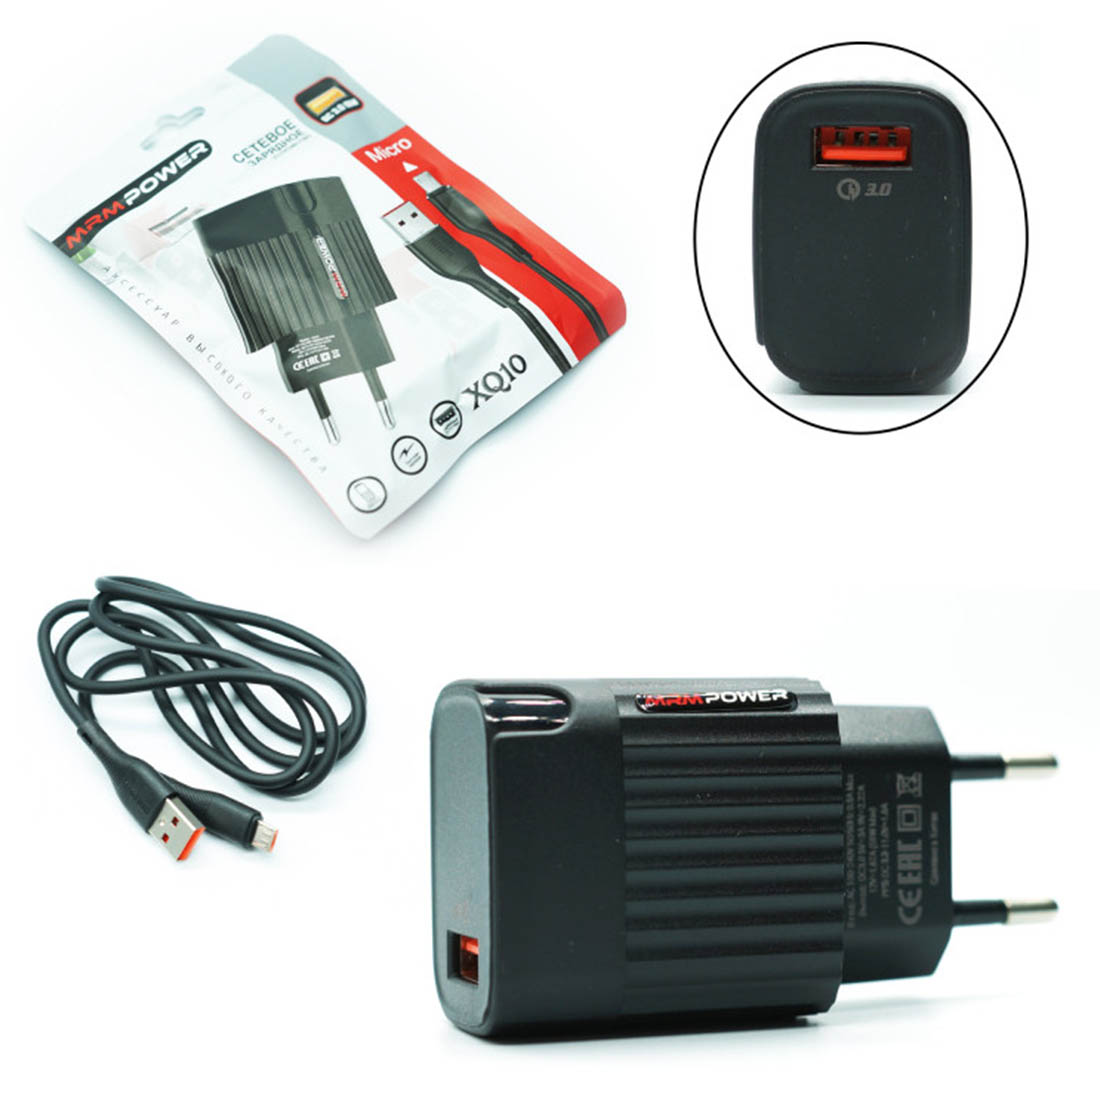 СЗУ (Сетевое зарядное устройство) MRM XQ10 c кабелем micro USB, 3.1A, длина 1 метр, QC3.0, 18W, цвет черный